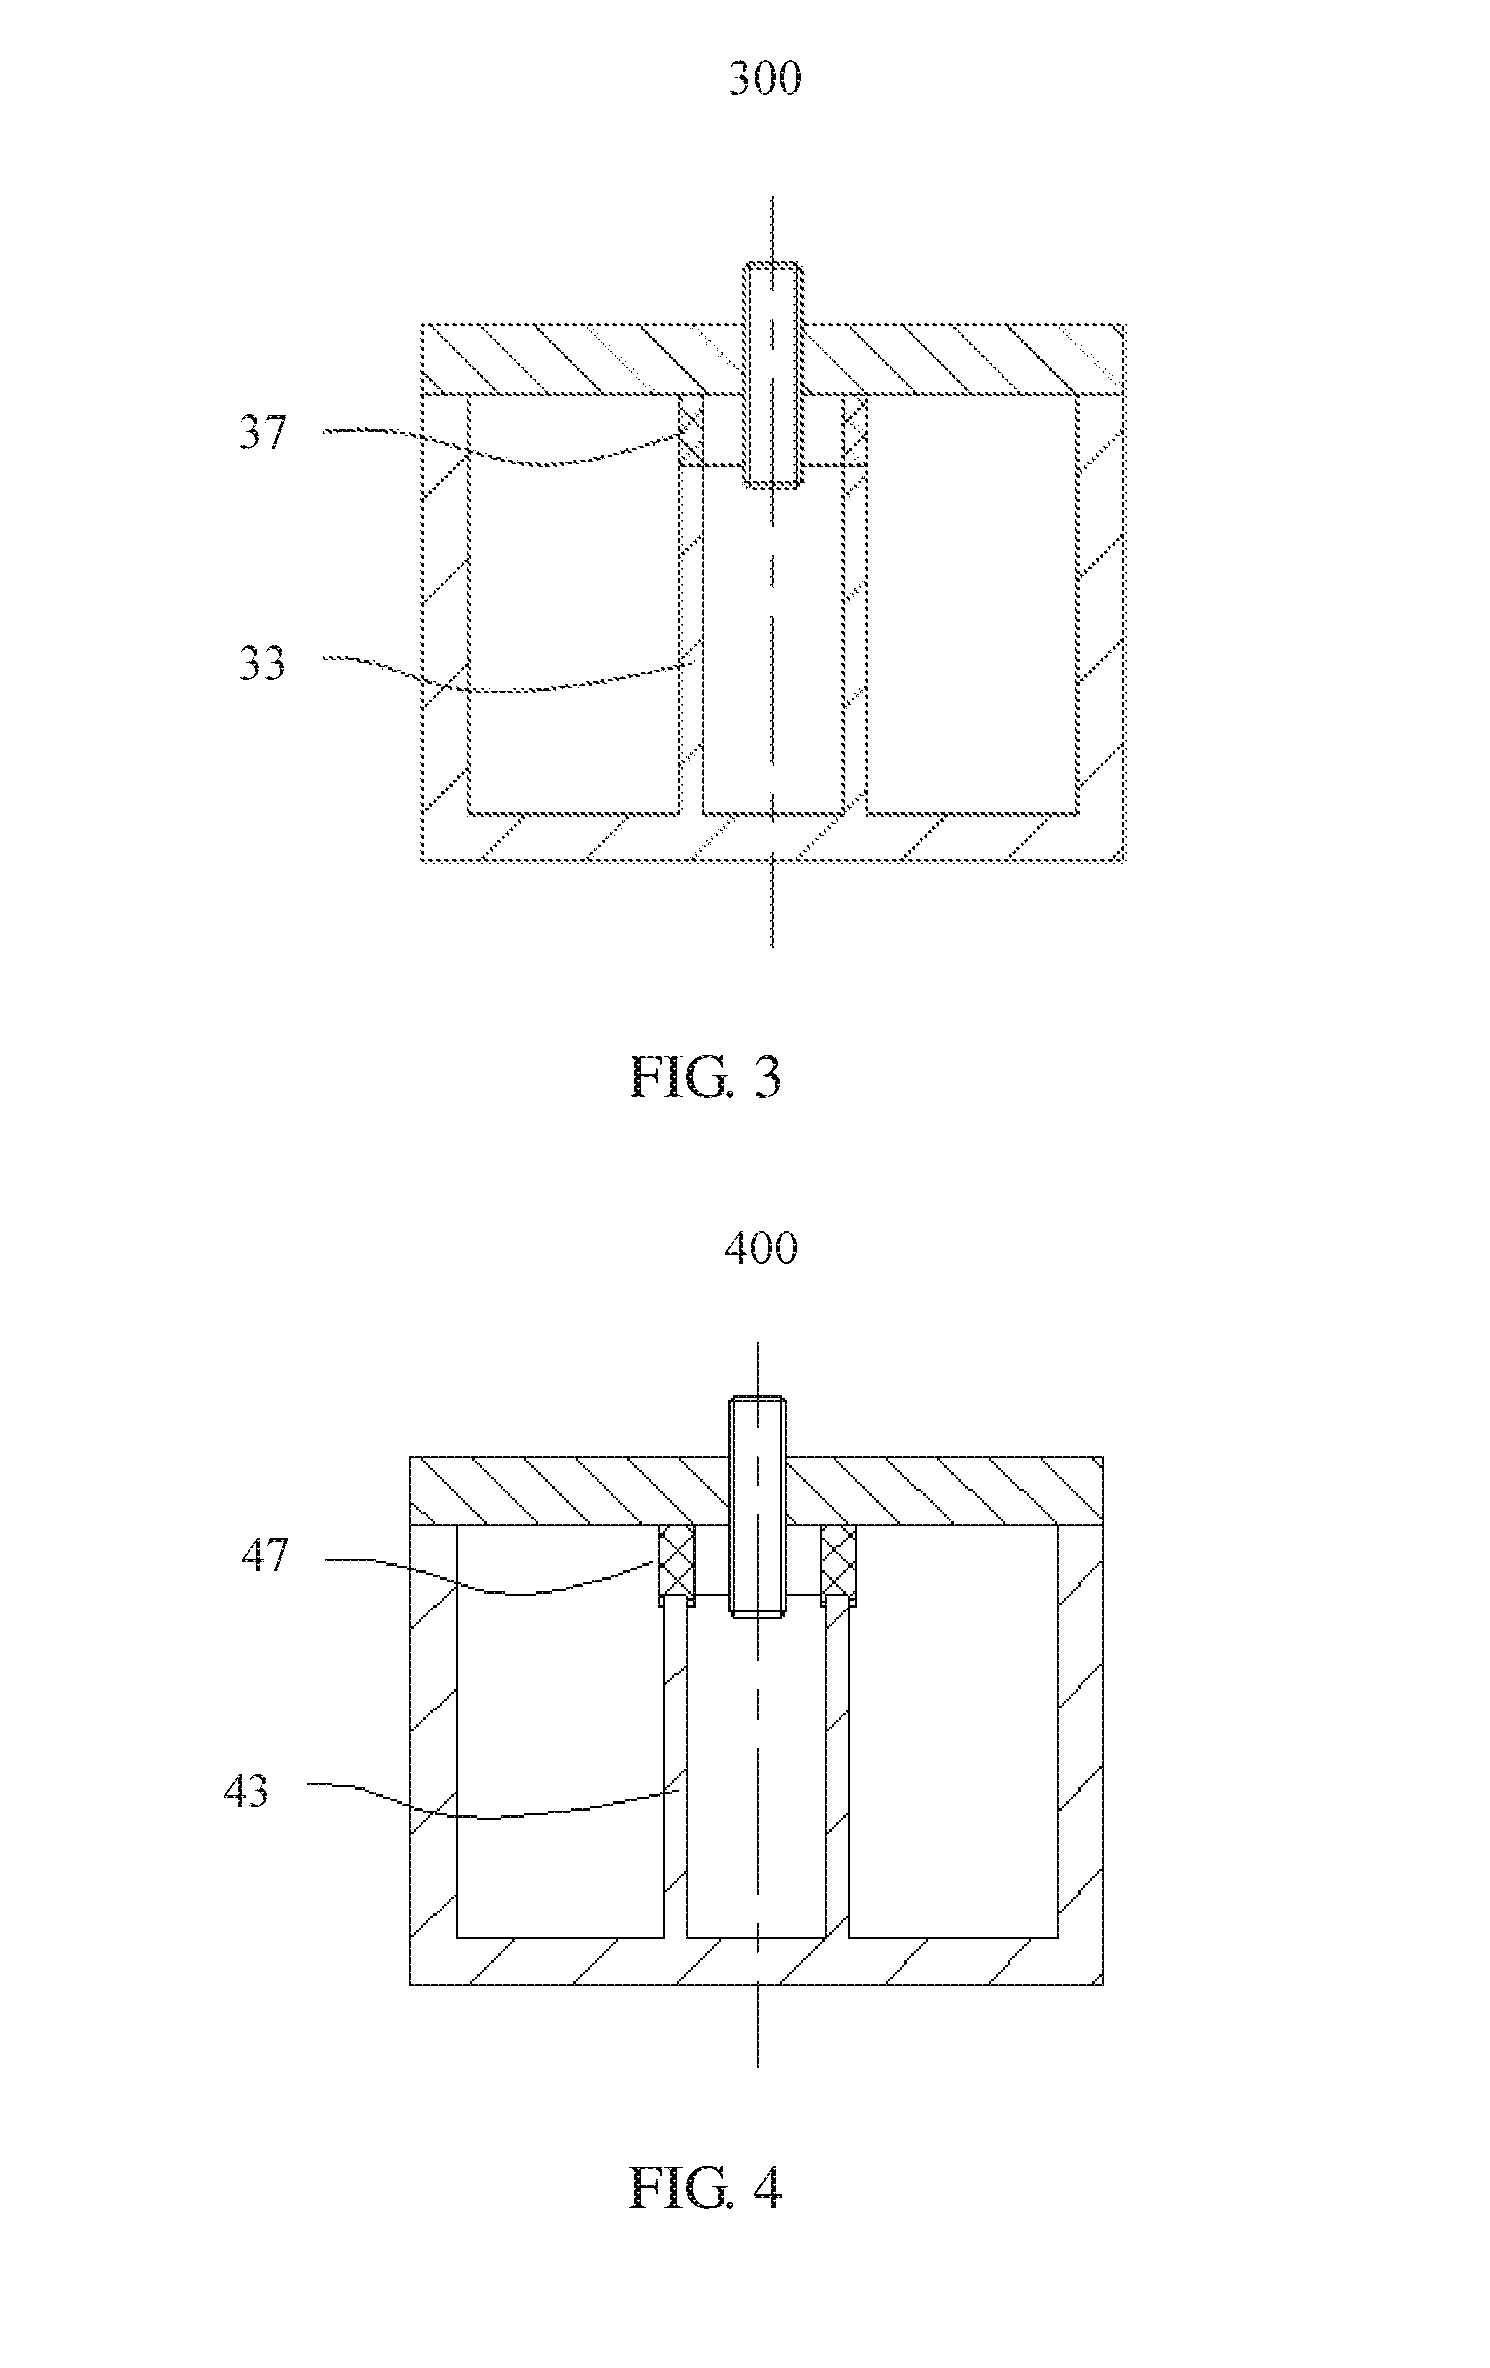 Resonator, Filter, Duplexer, and Multiplexer